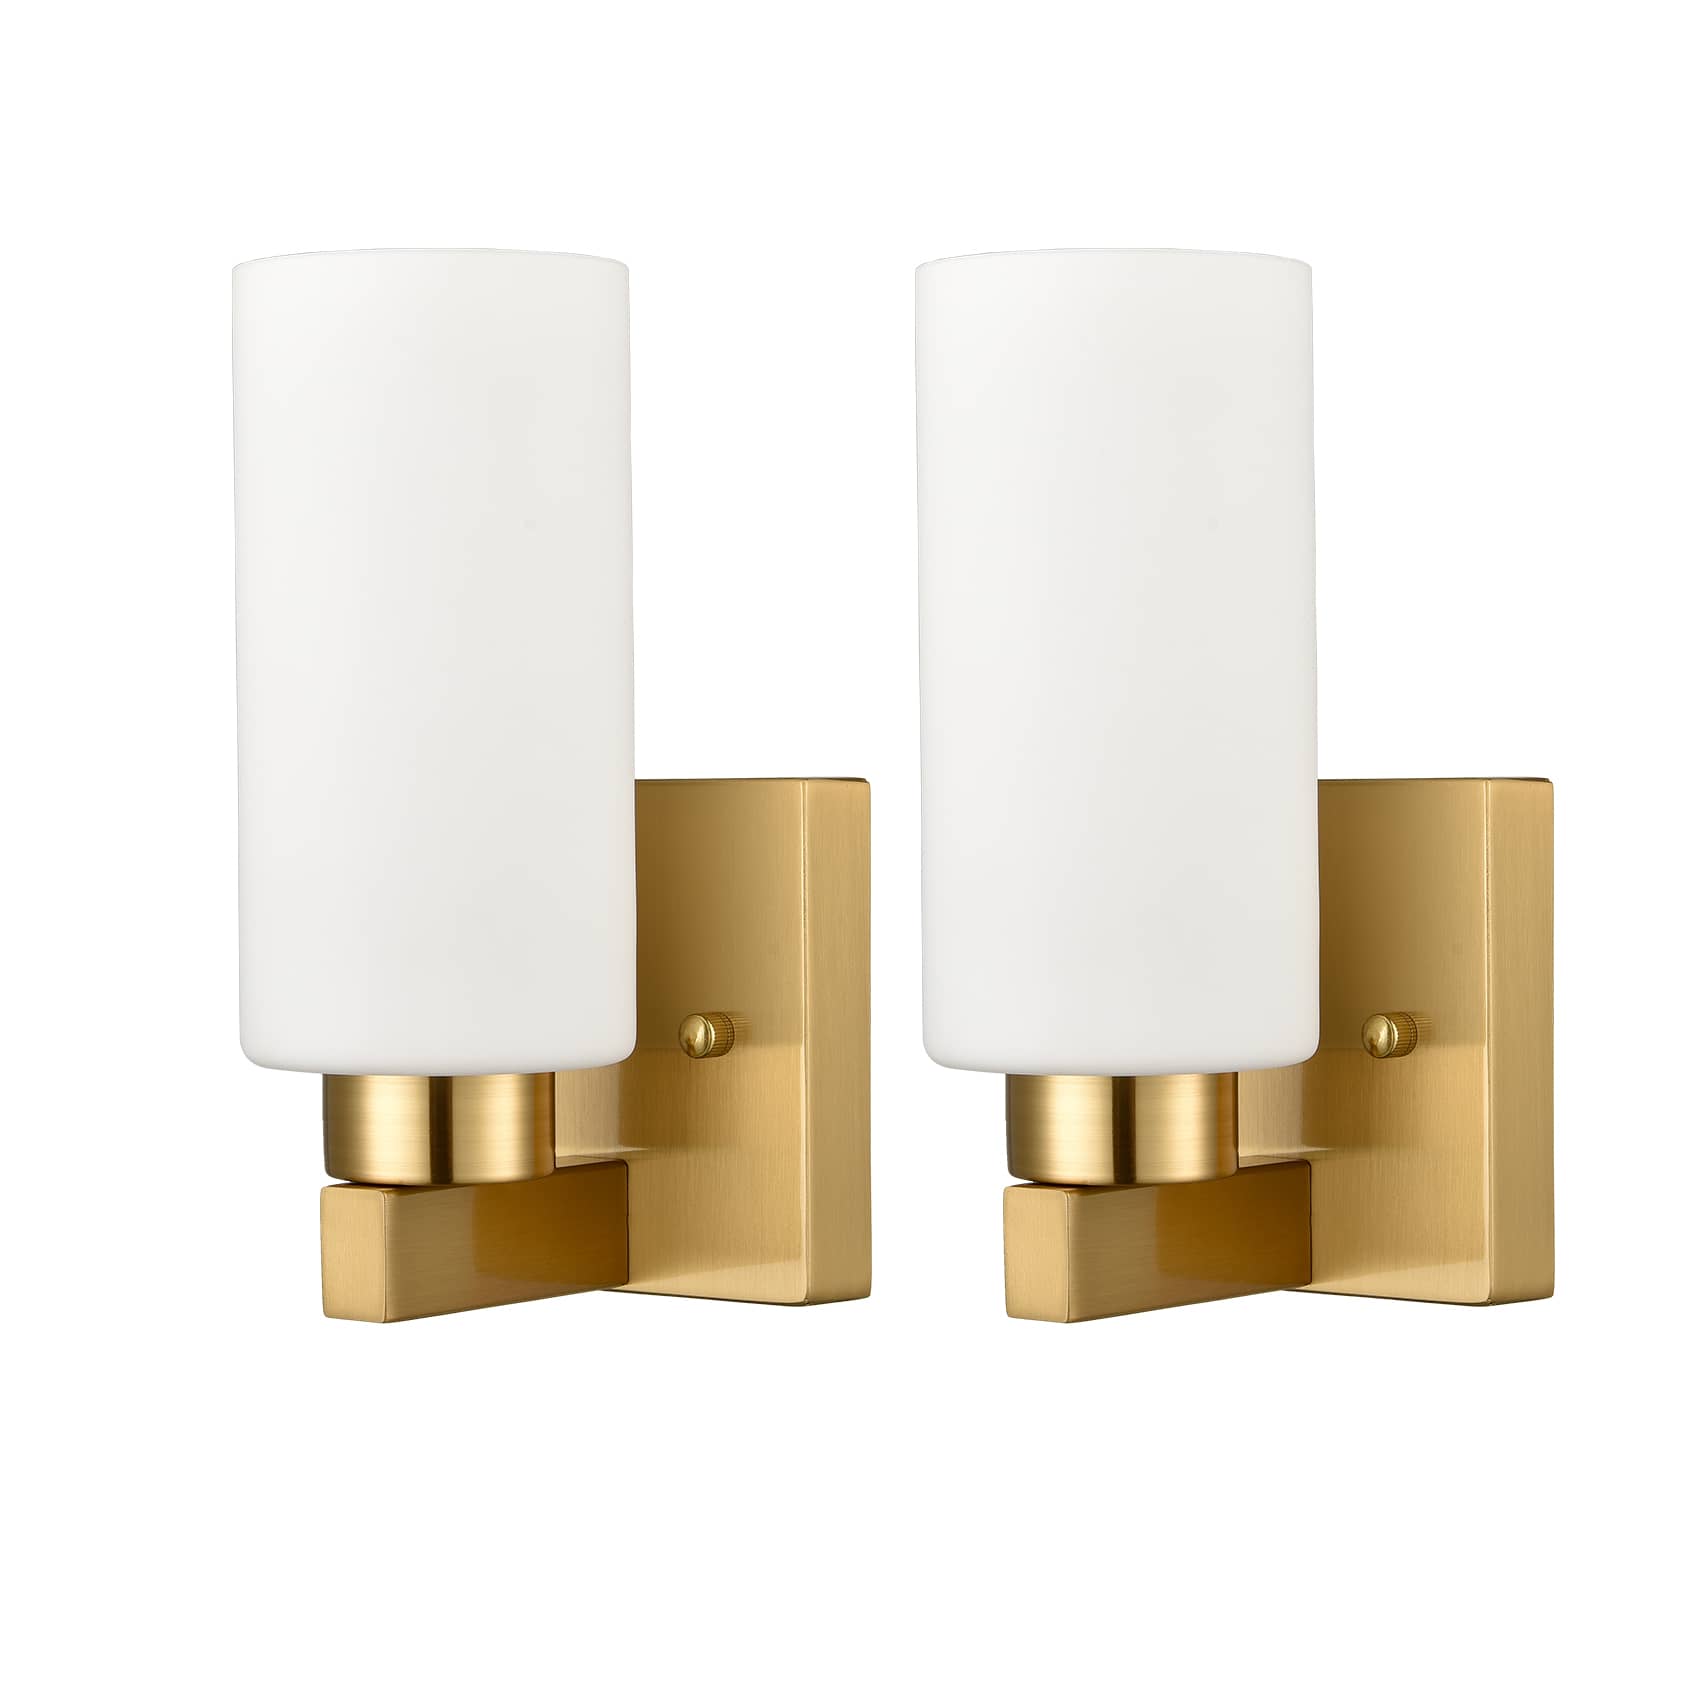 Bathroom Modern Brass Wall Light Milky White Cylinder Glass Set of 2